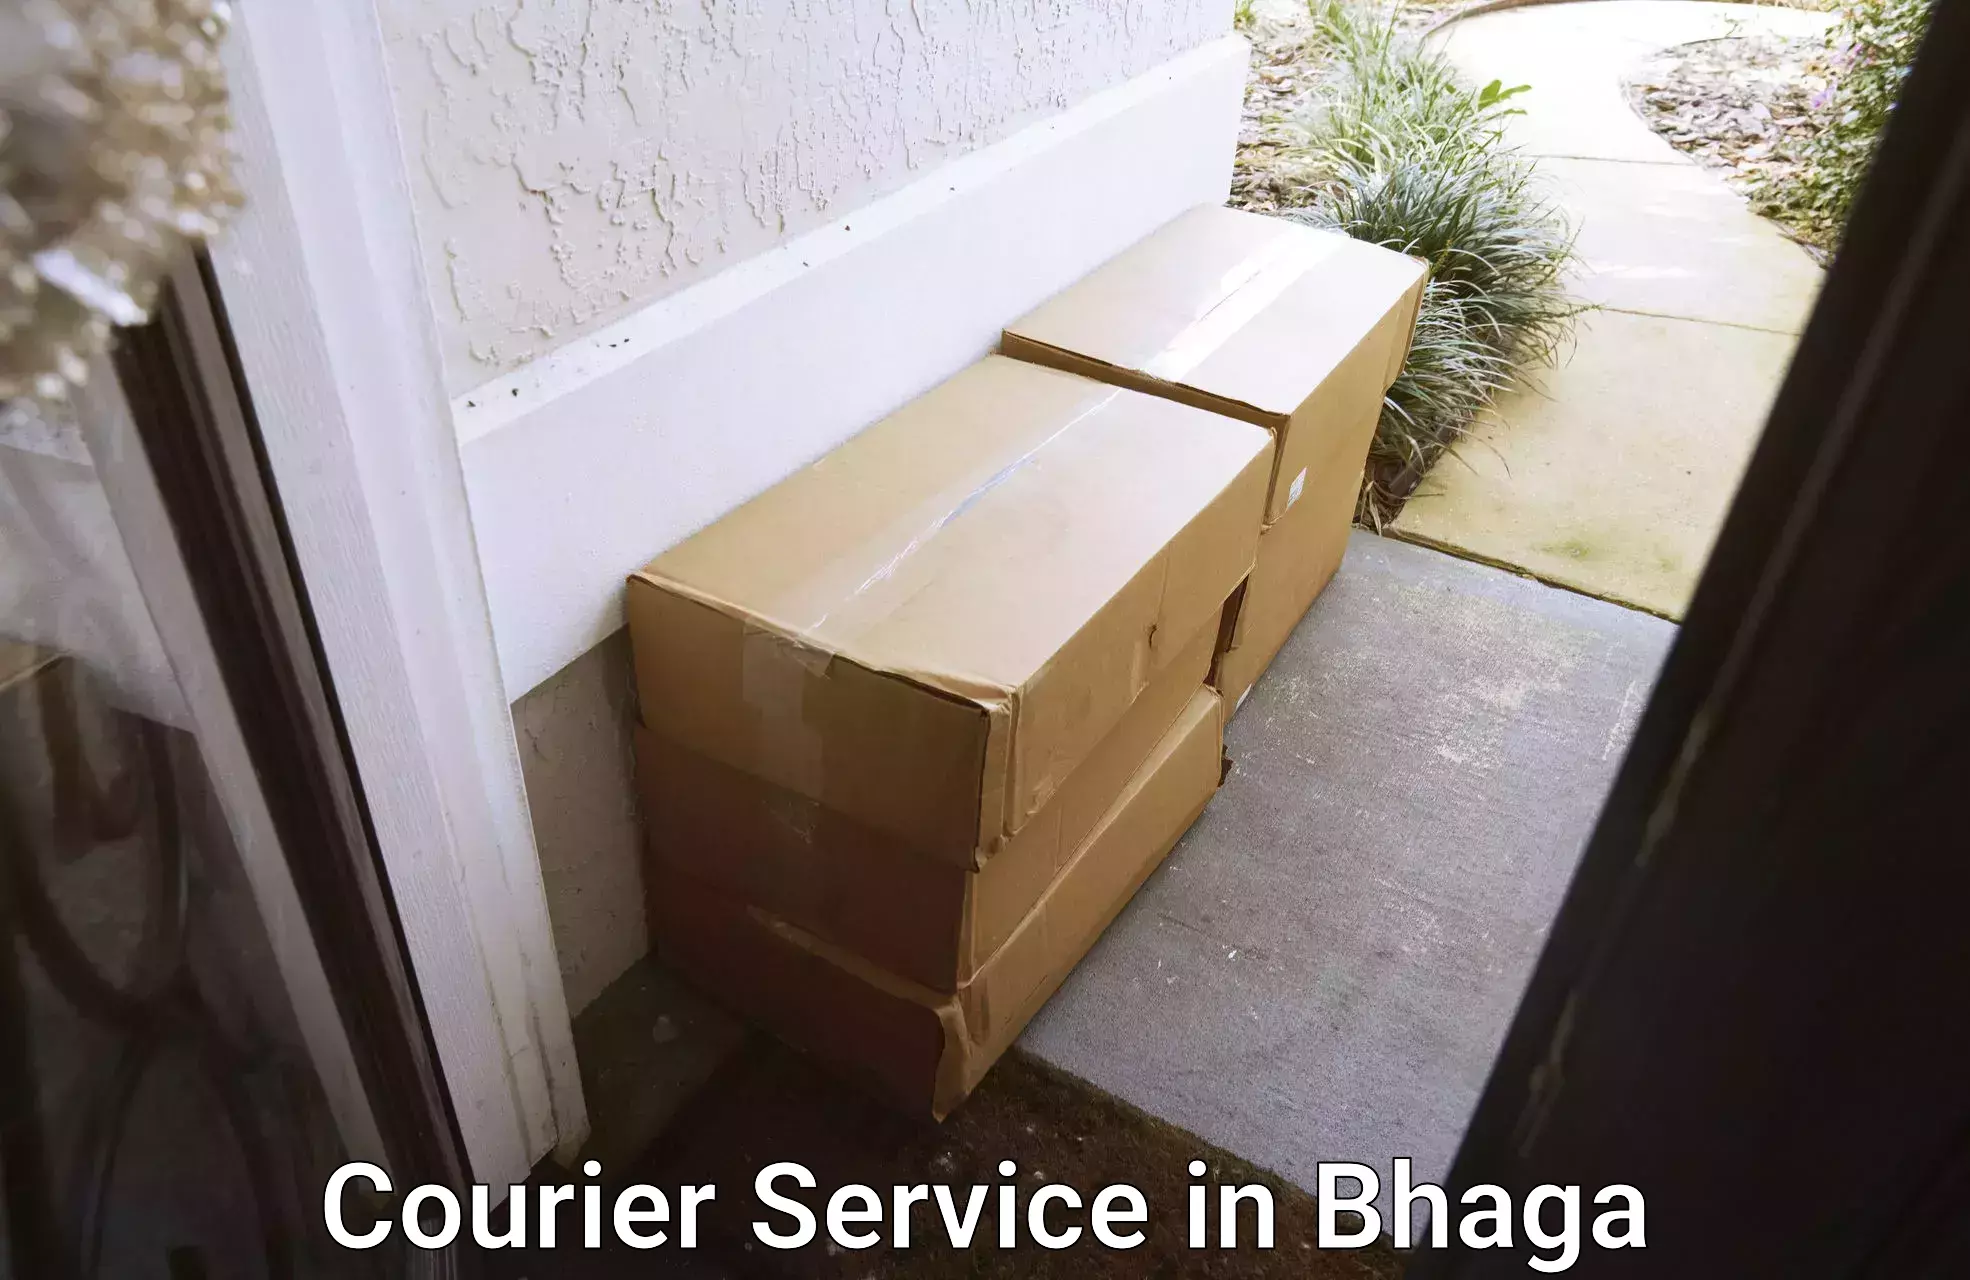 Efficient order fulfillment in Bhaga